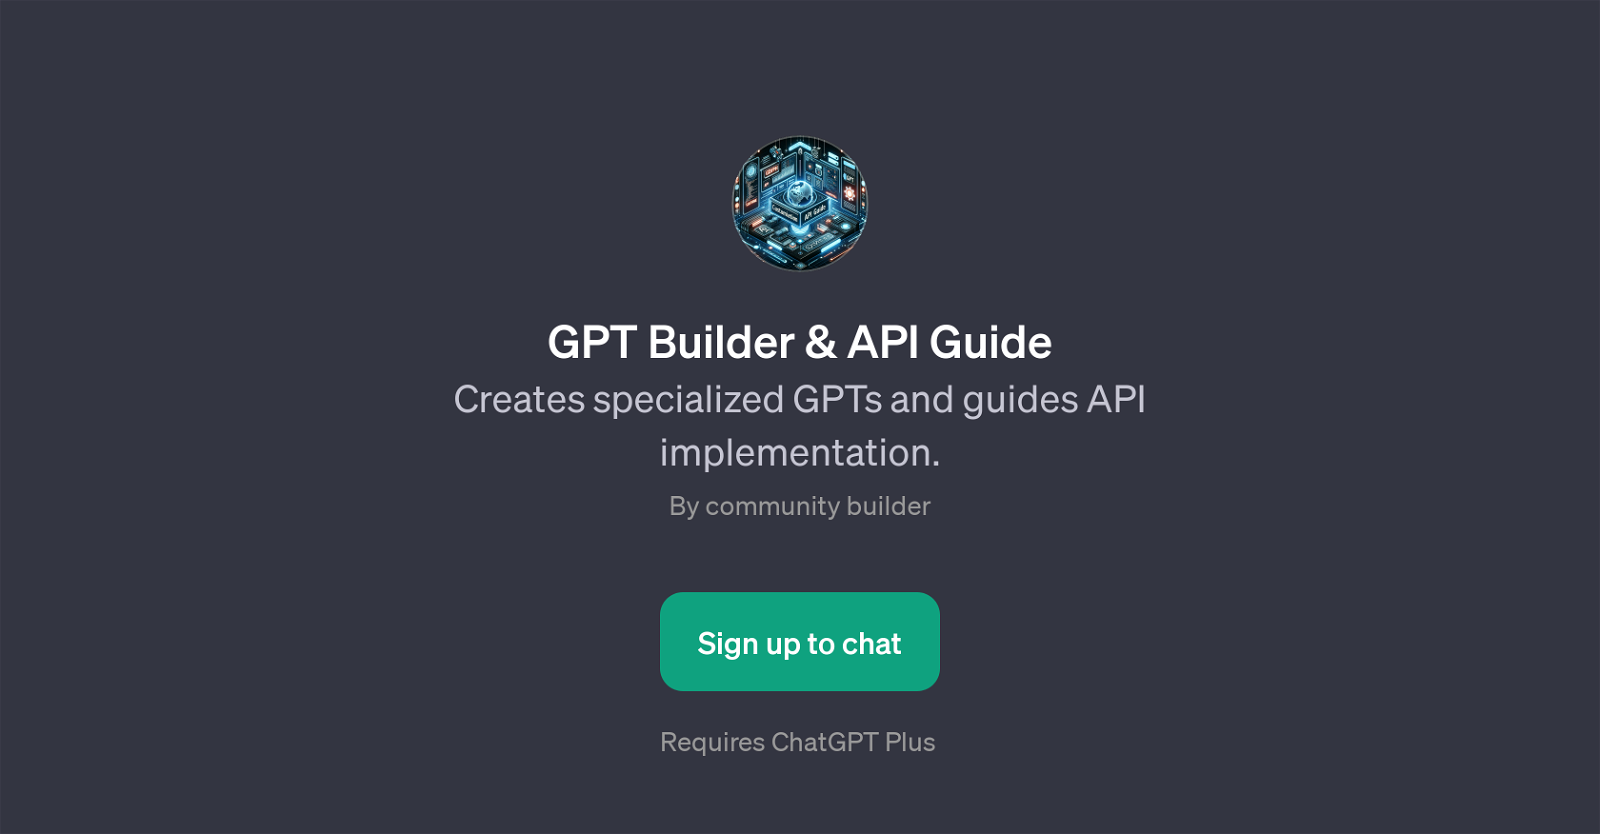 GPT Builder & API Guide website